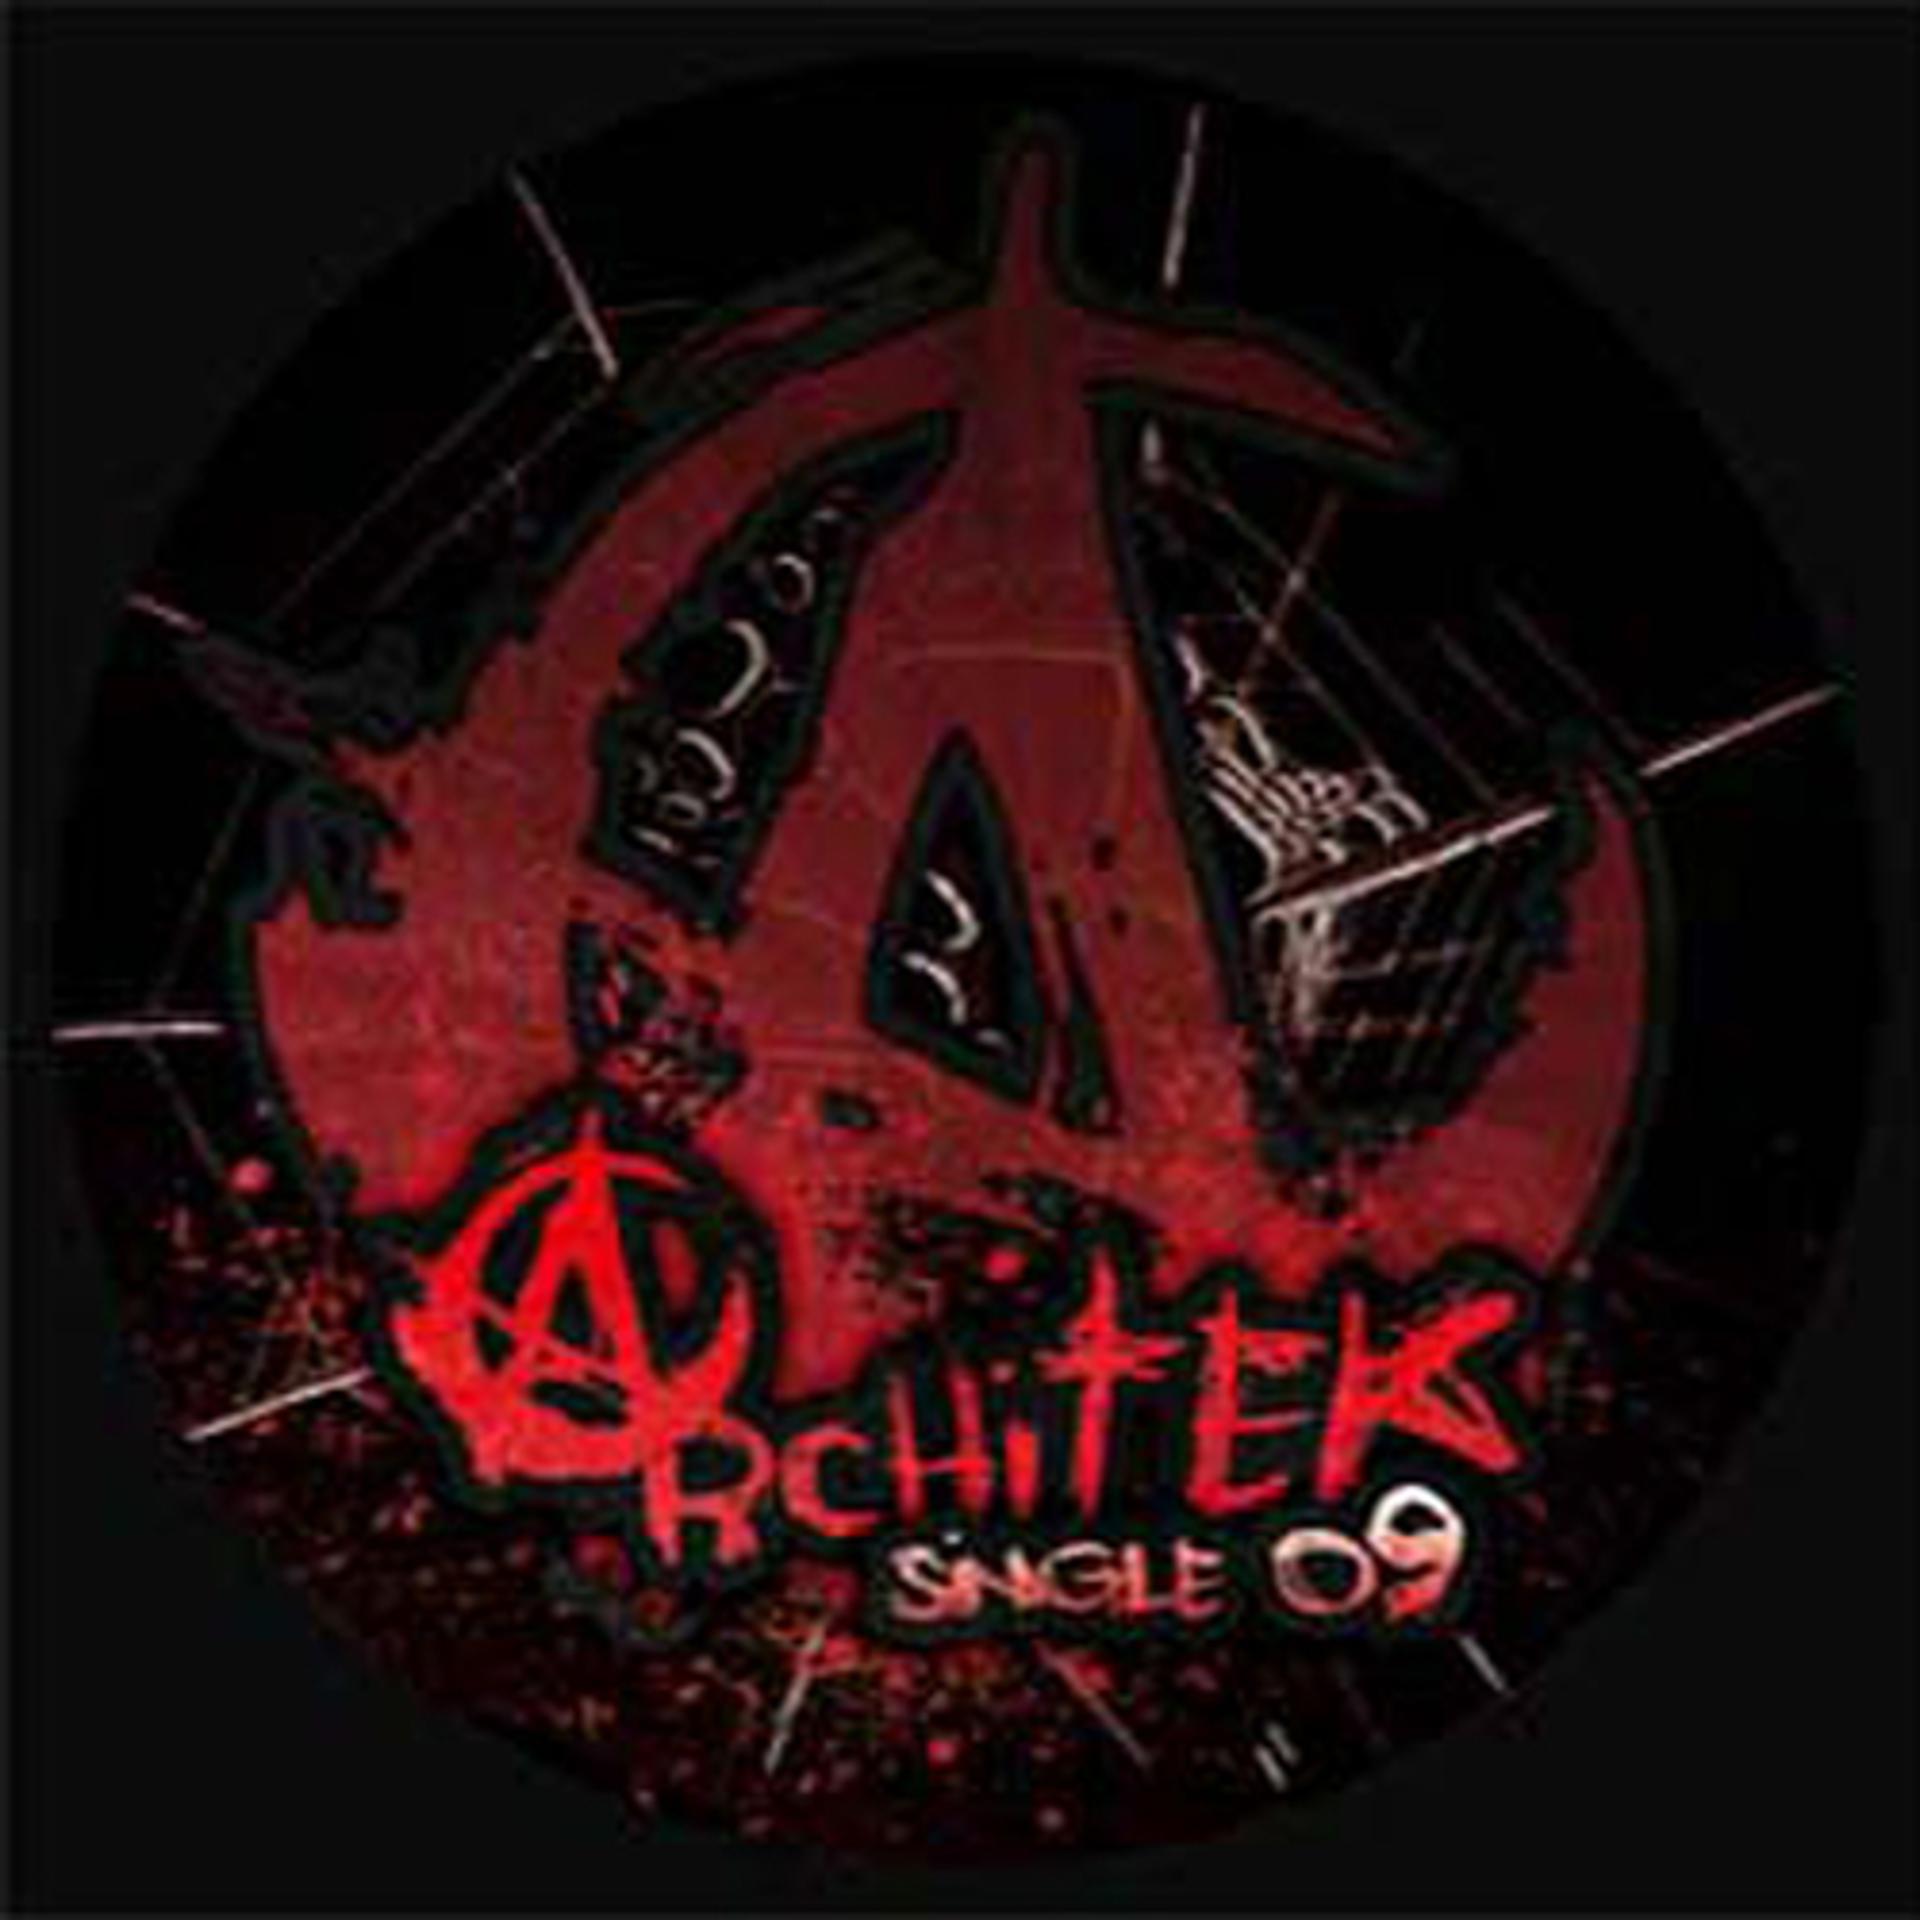 Постер альбома ARCHITEK SINGLE 09